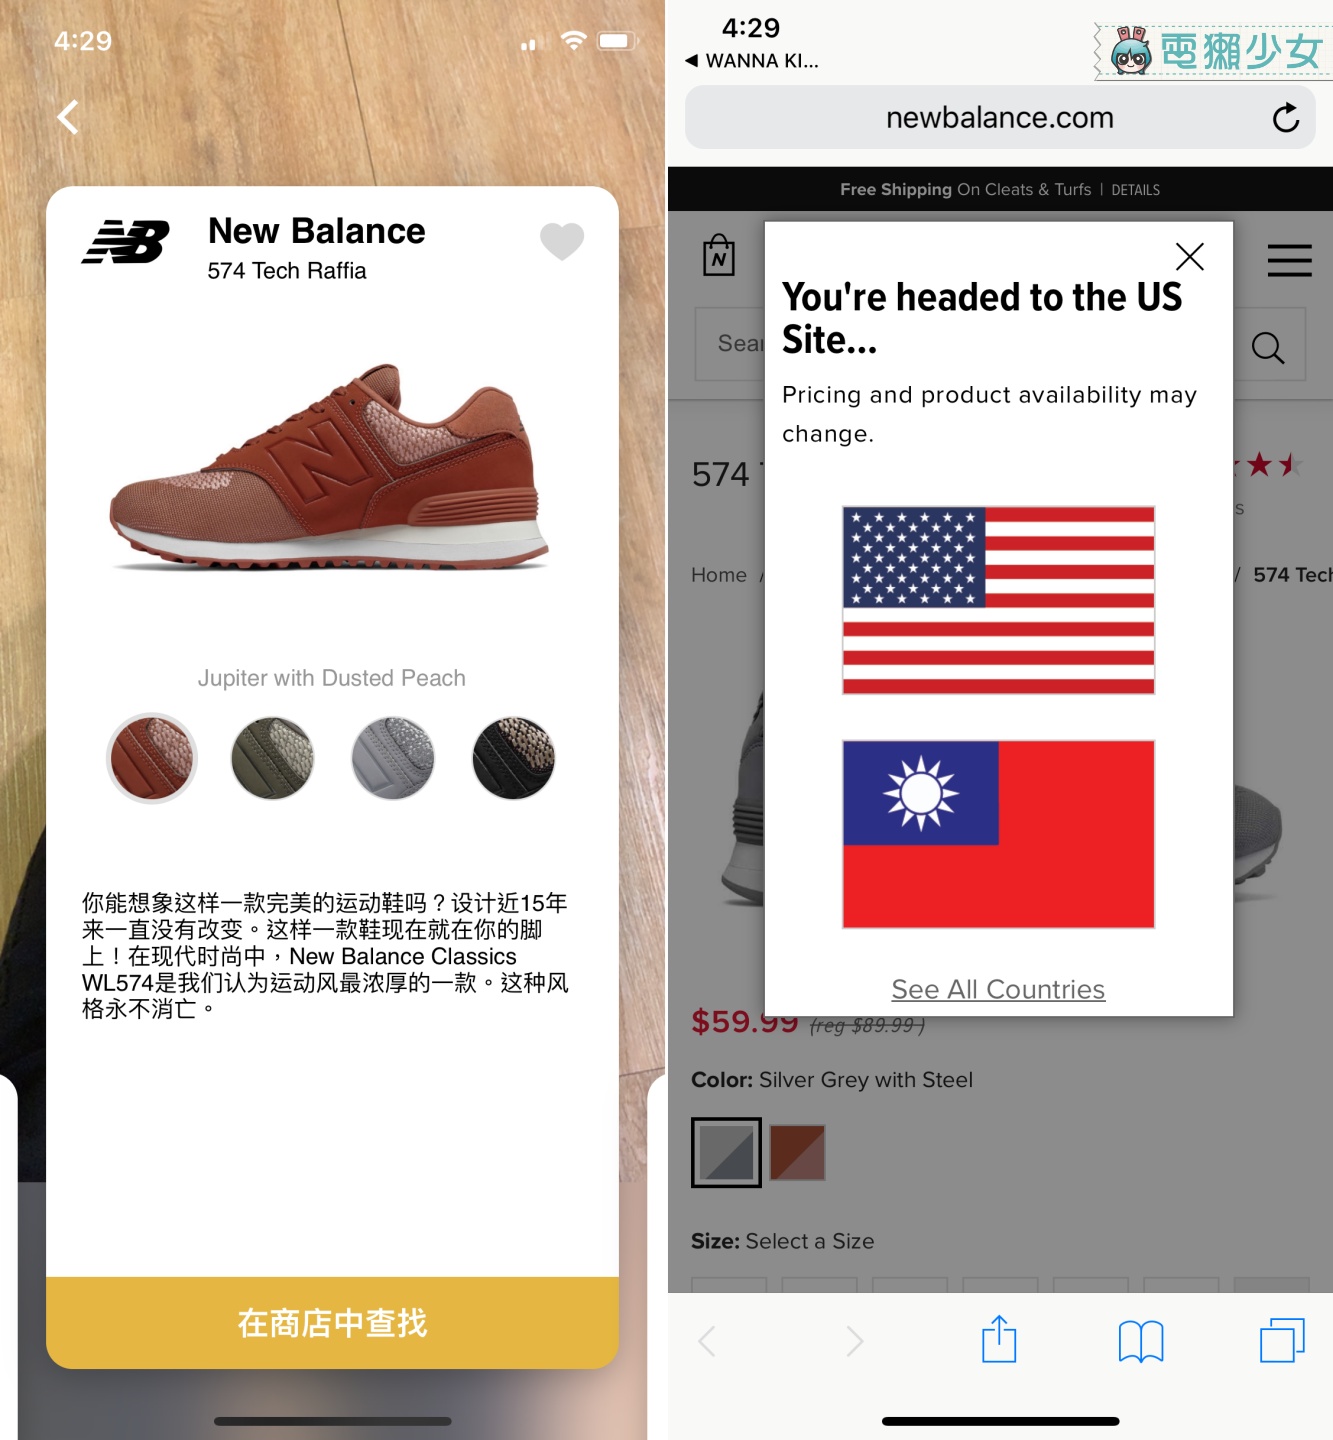 『 Wanna Kicks 』買鞋前先幫你模擬試穿效果 不用再擔心把時間跟錢花在錯的鞋子上啦 iOS